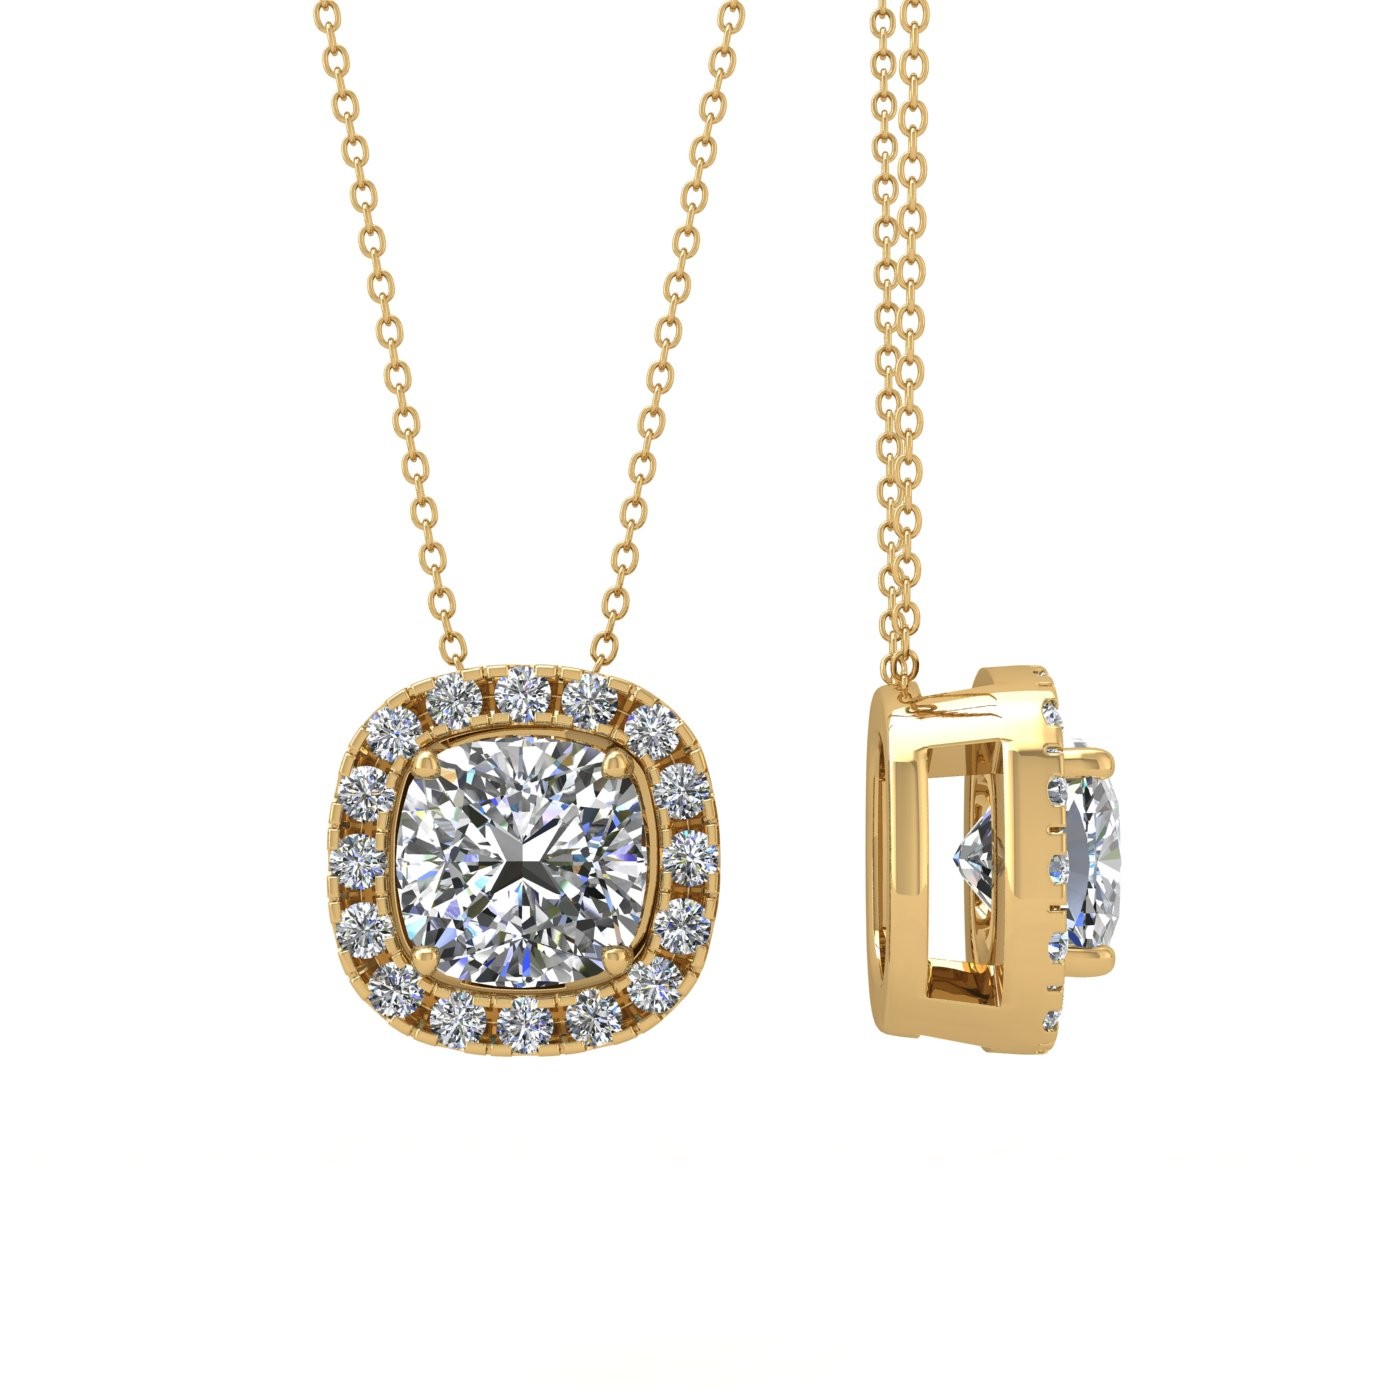 18k yellow gold  1,2 ct 4 prongs cushion shape diamond pendant with diamond pavÉ set halo Photos & images